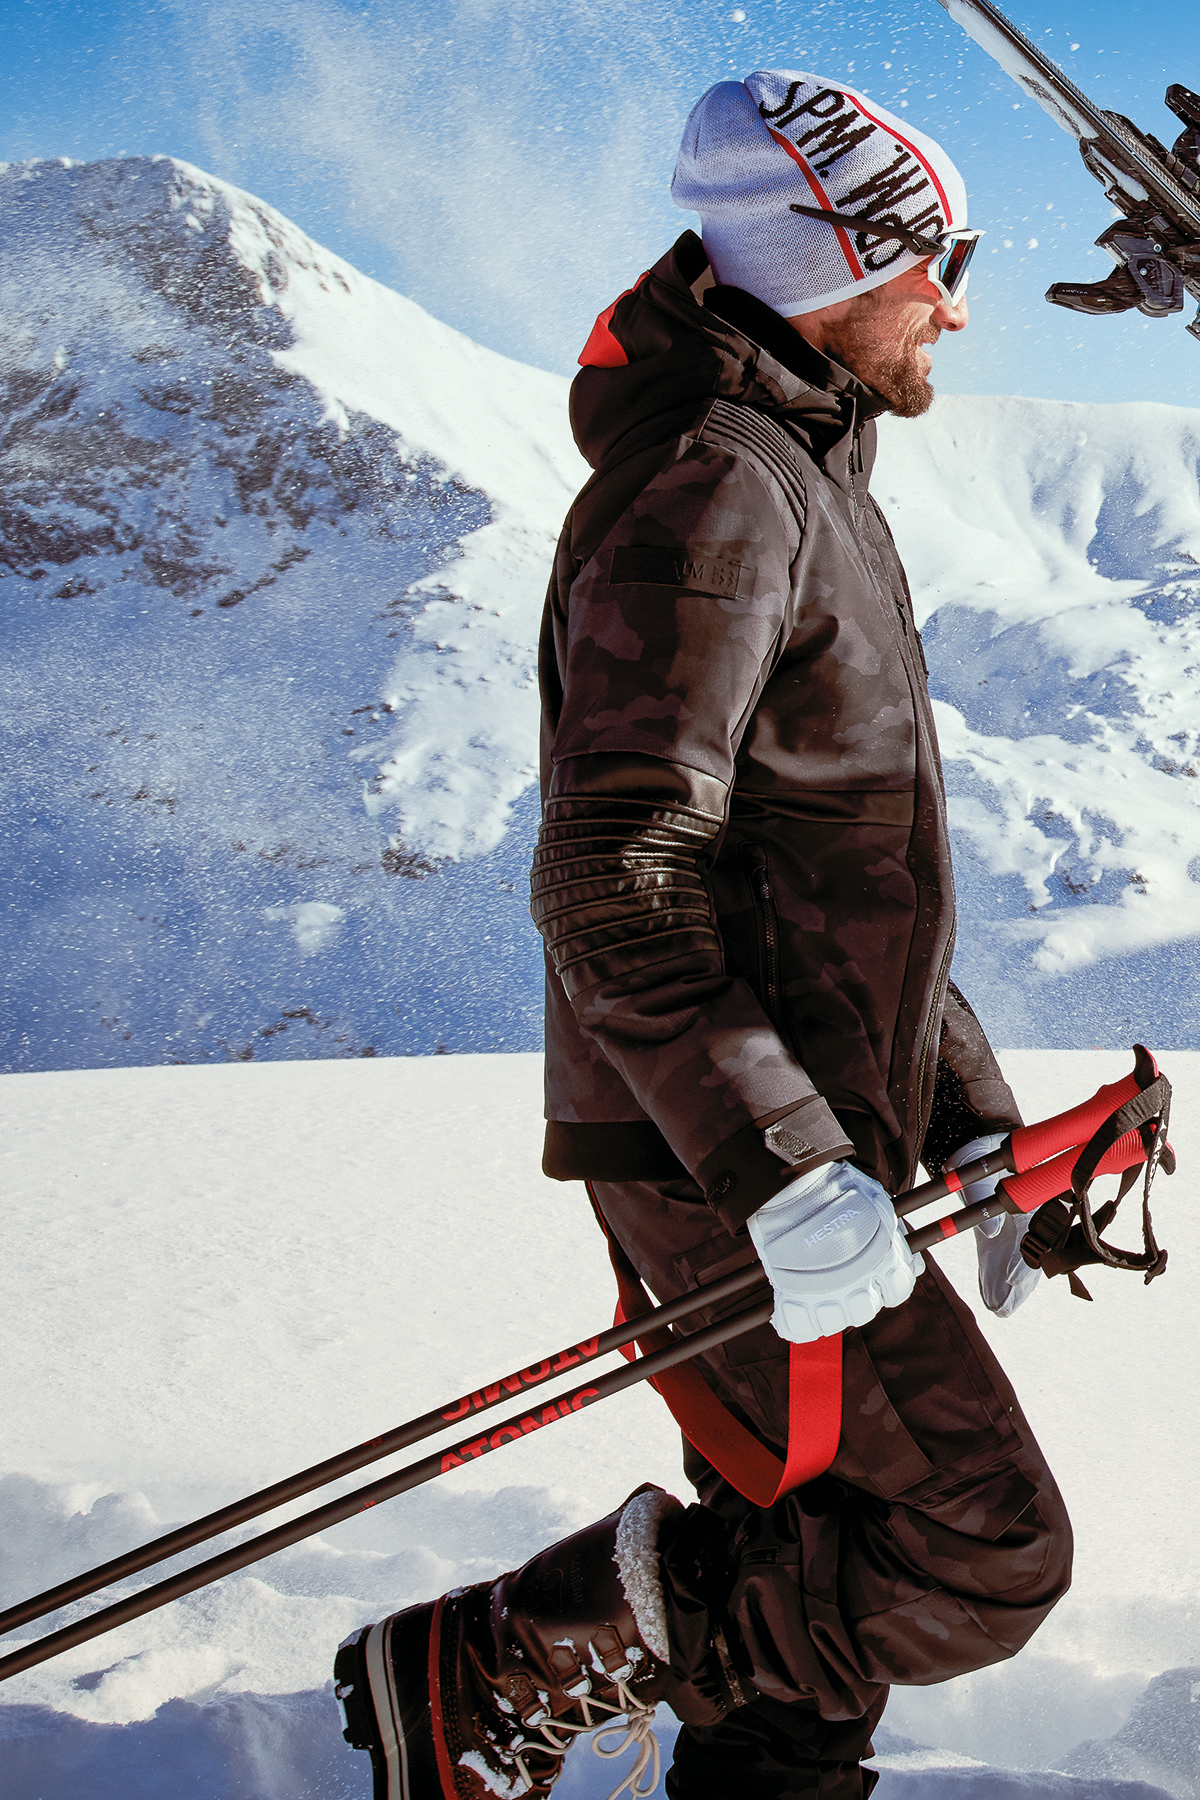 Geci Ski & Snow -  sportalm Torben Camo 903021192-58